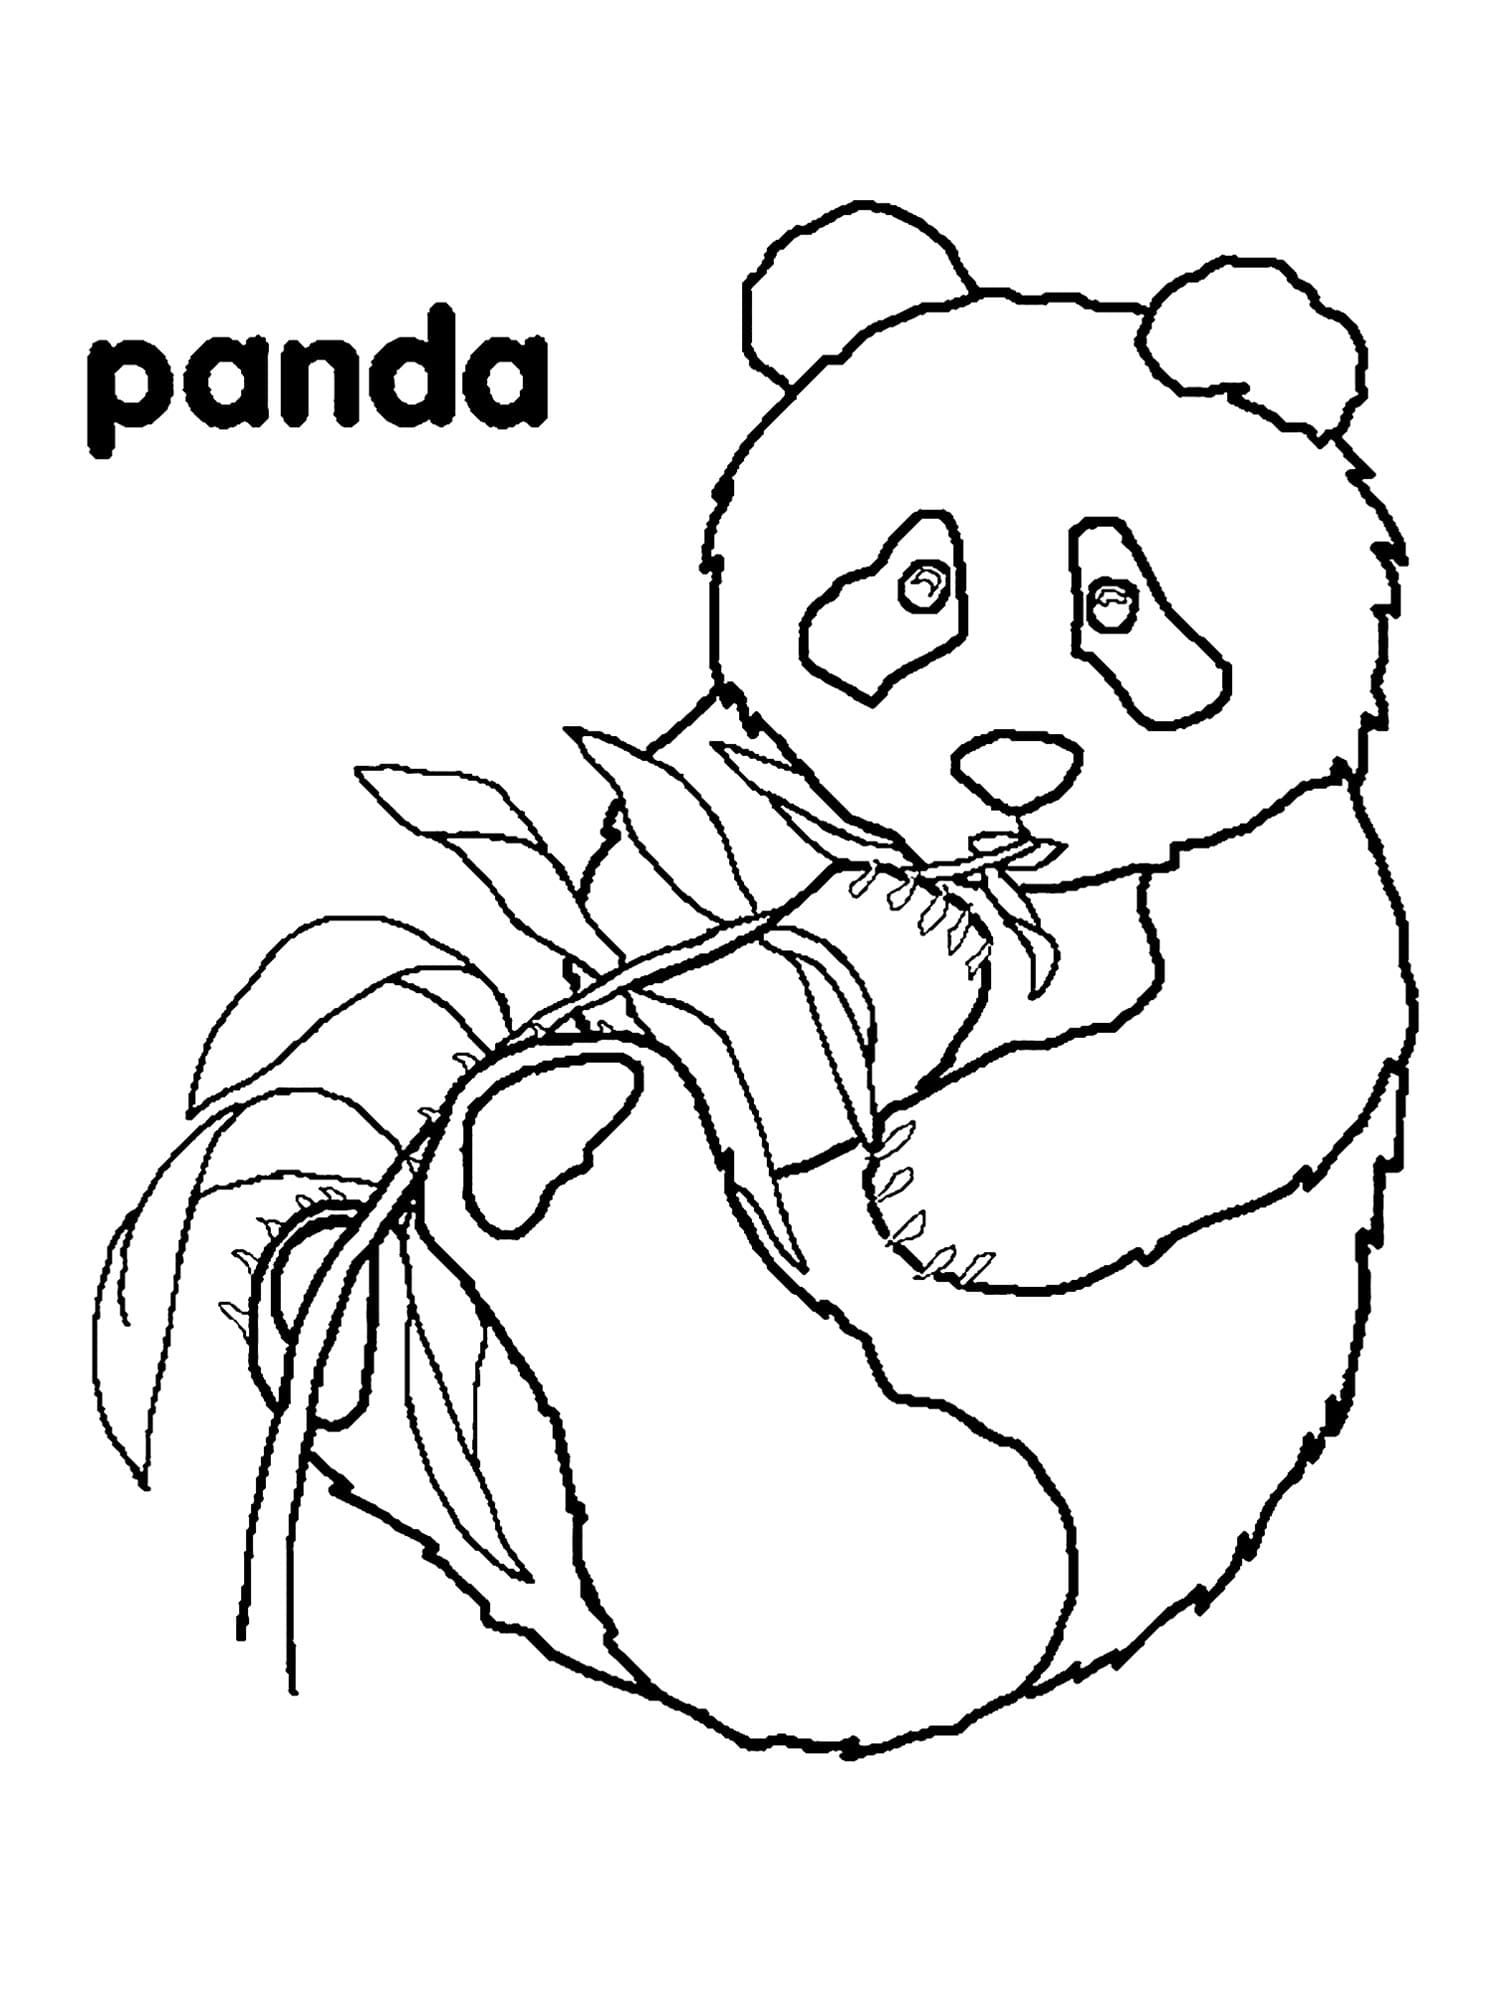 Cute Pandas Image Coloring Page